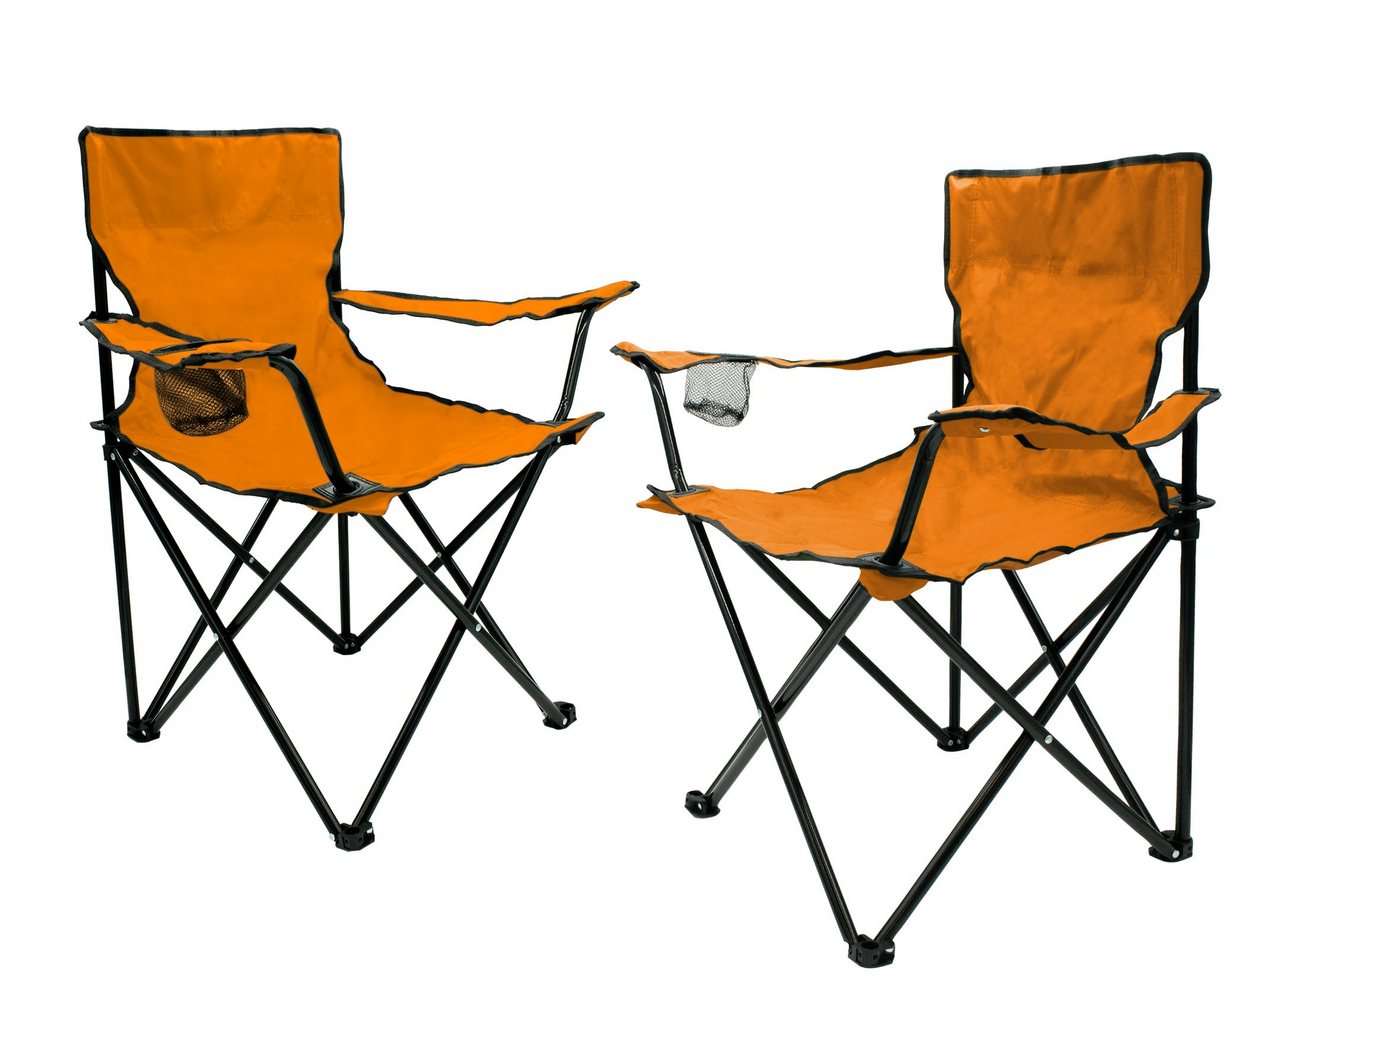 Spetebo Campingstuhl Campingstuhl mit Getränkehalter - grün / 2er Set (2er Set, 1 St), Camping Strand und Garten Klappstuhl von Spetebo